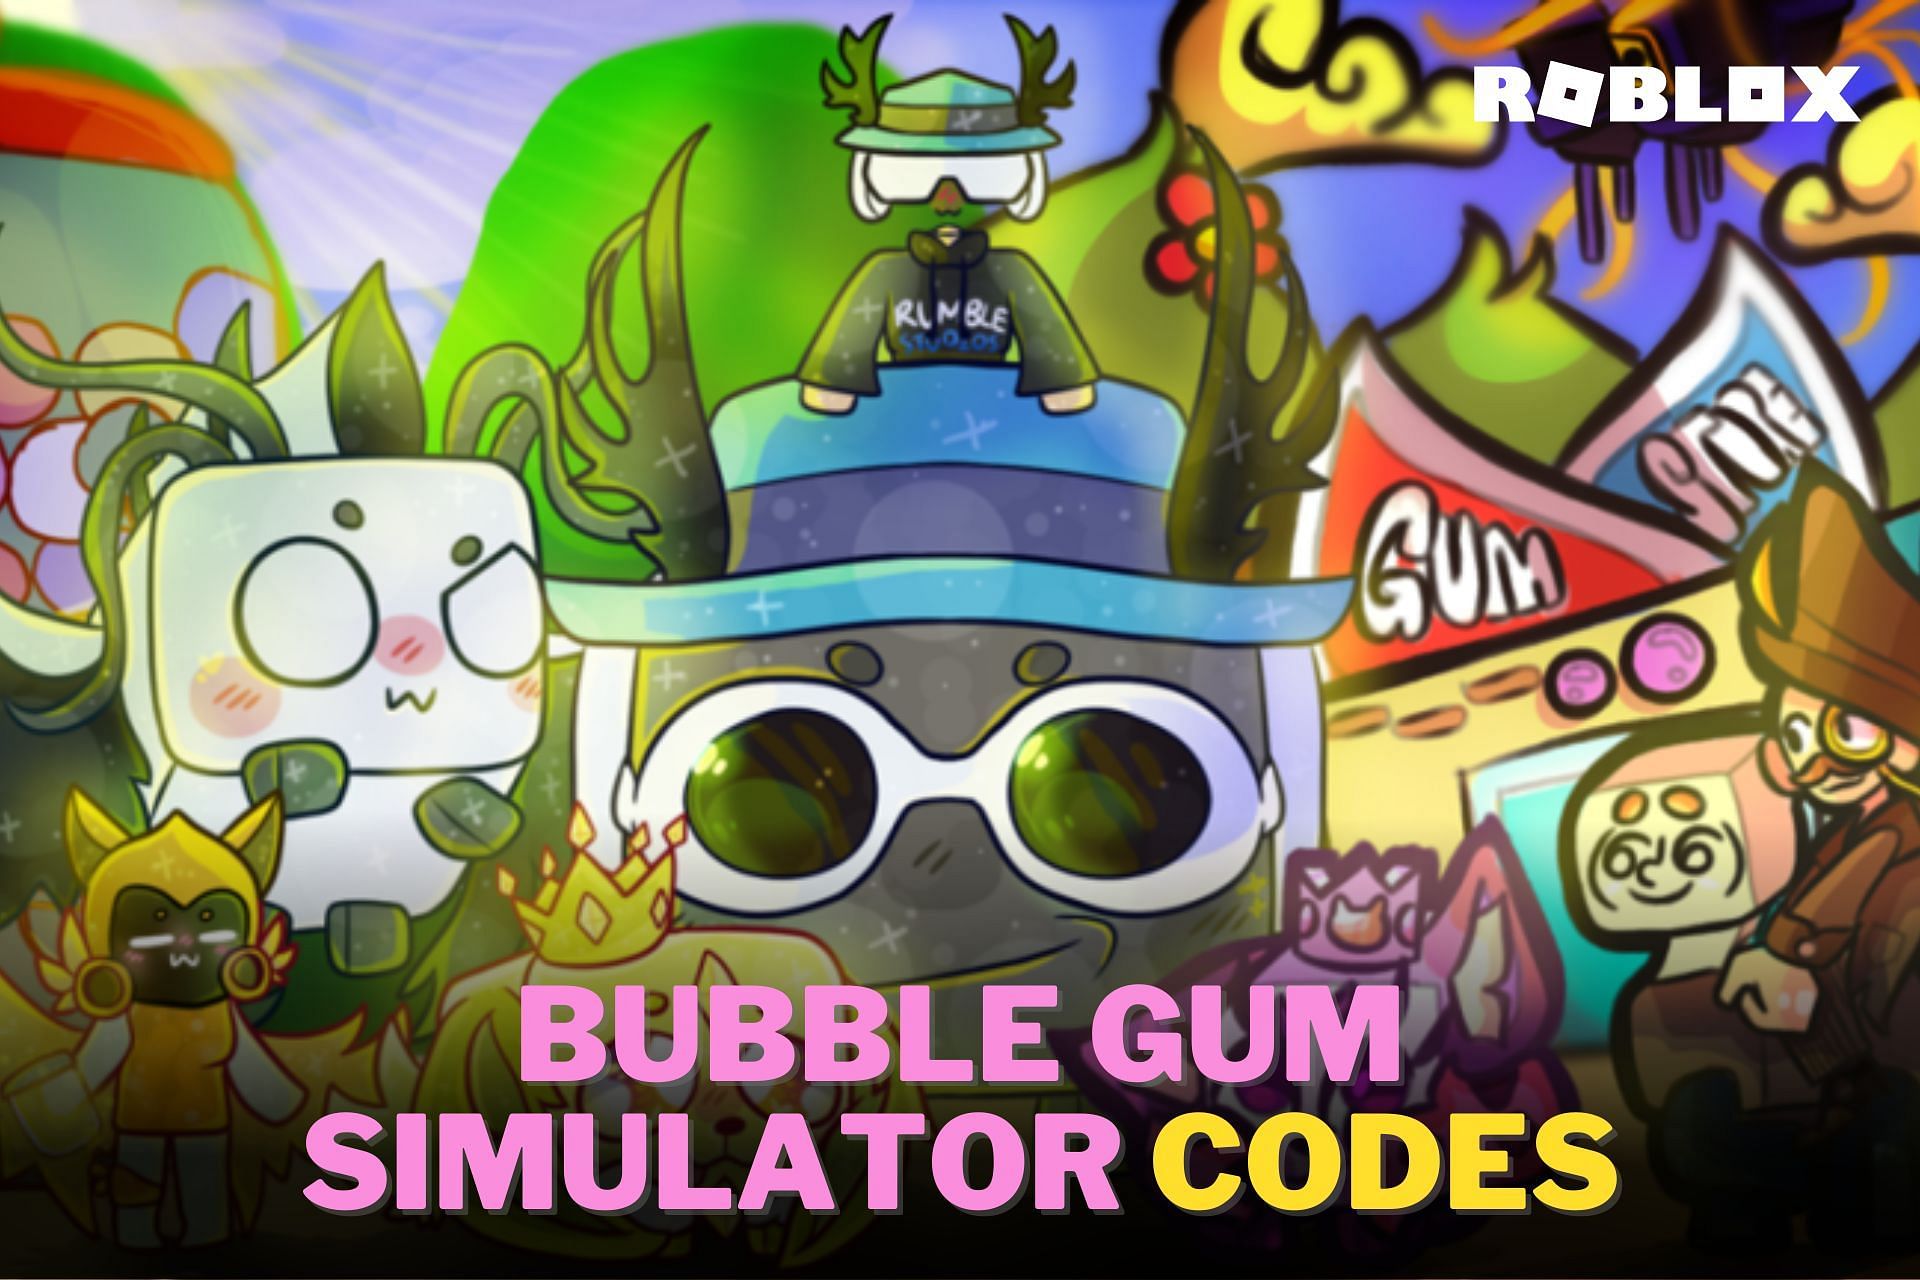 Bubble Gum Simulator 100 New Codes (April 2021) 